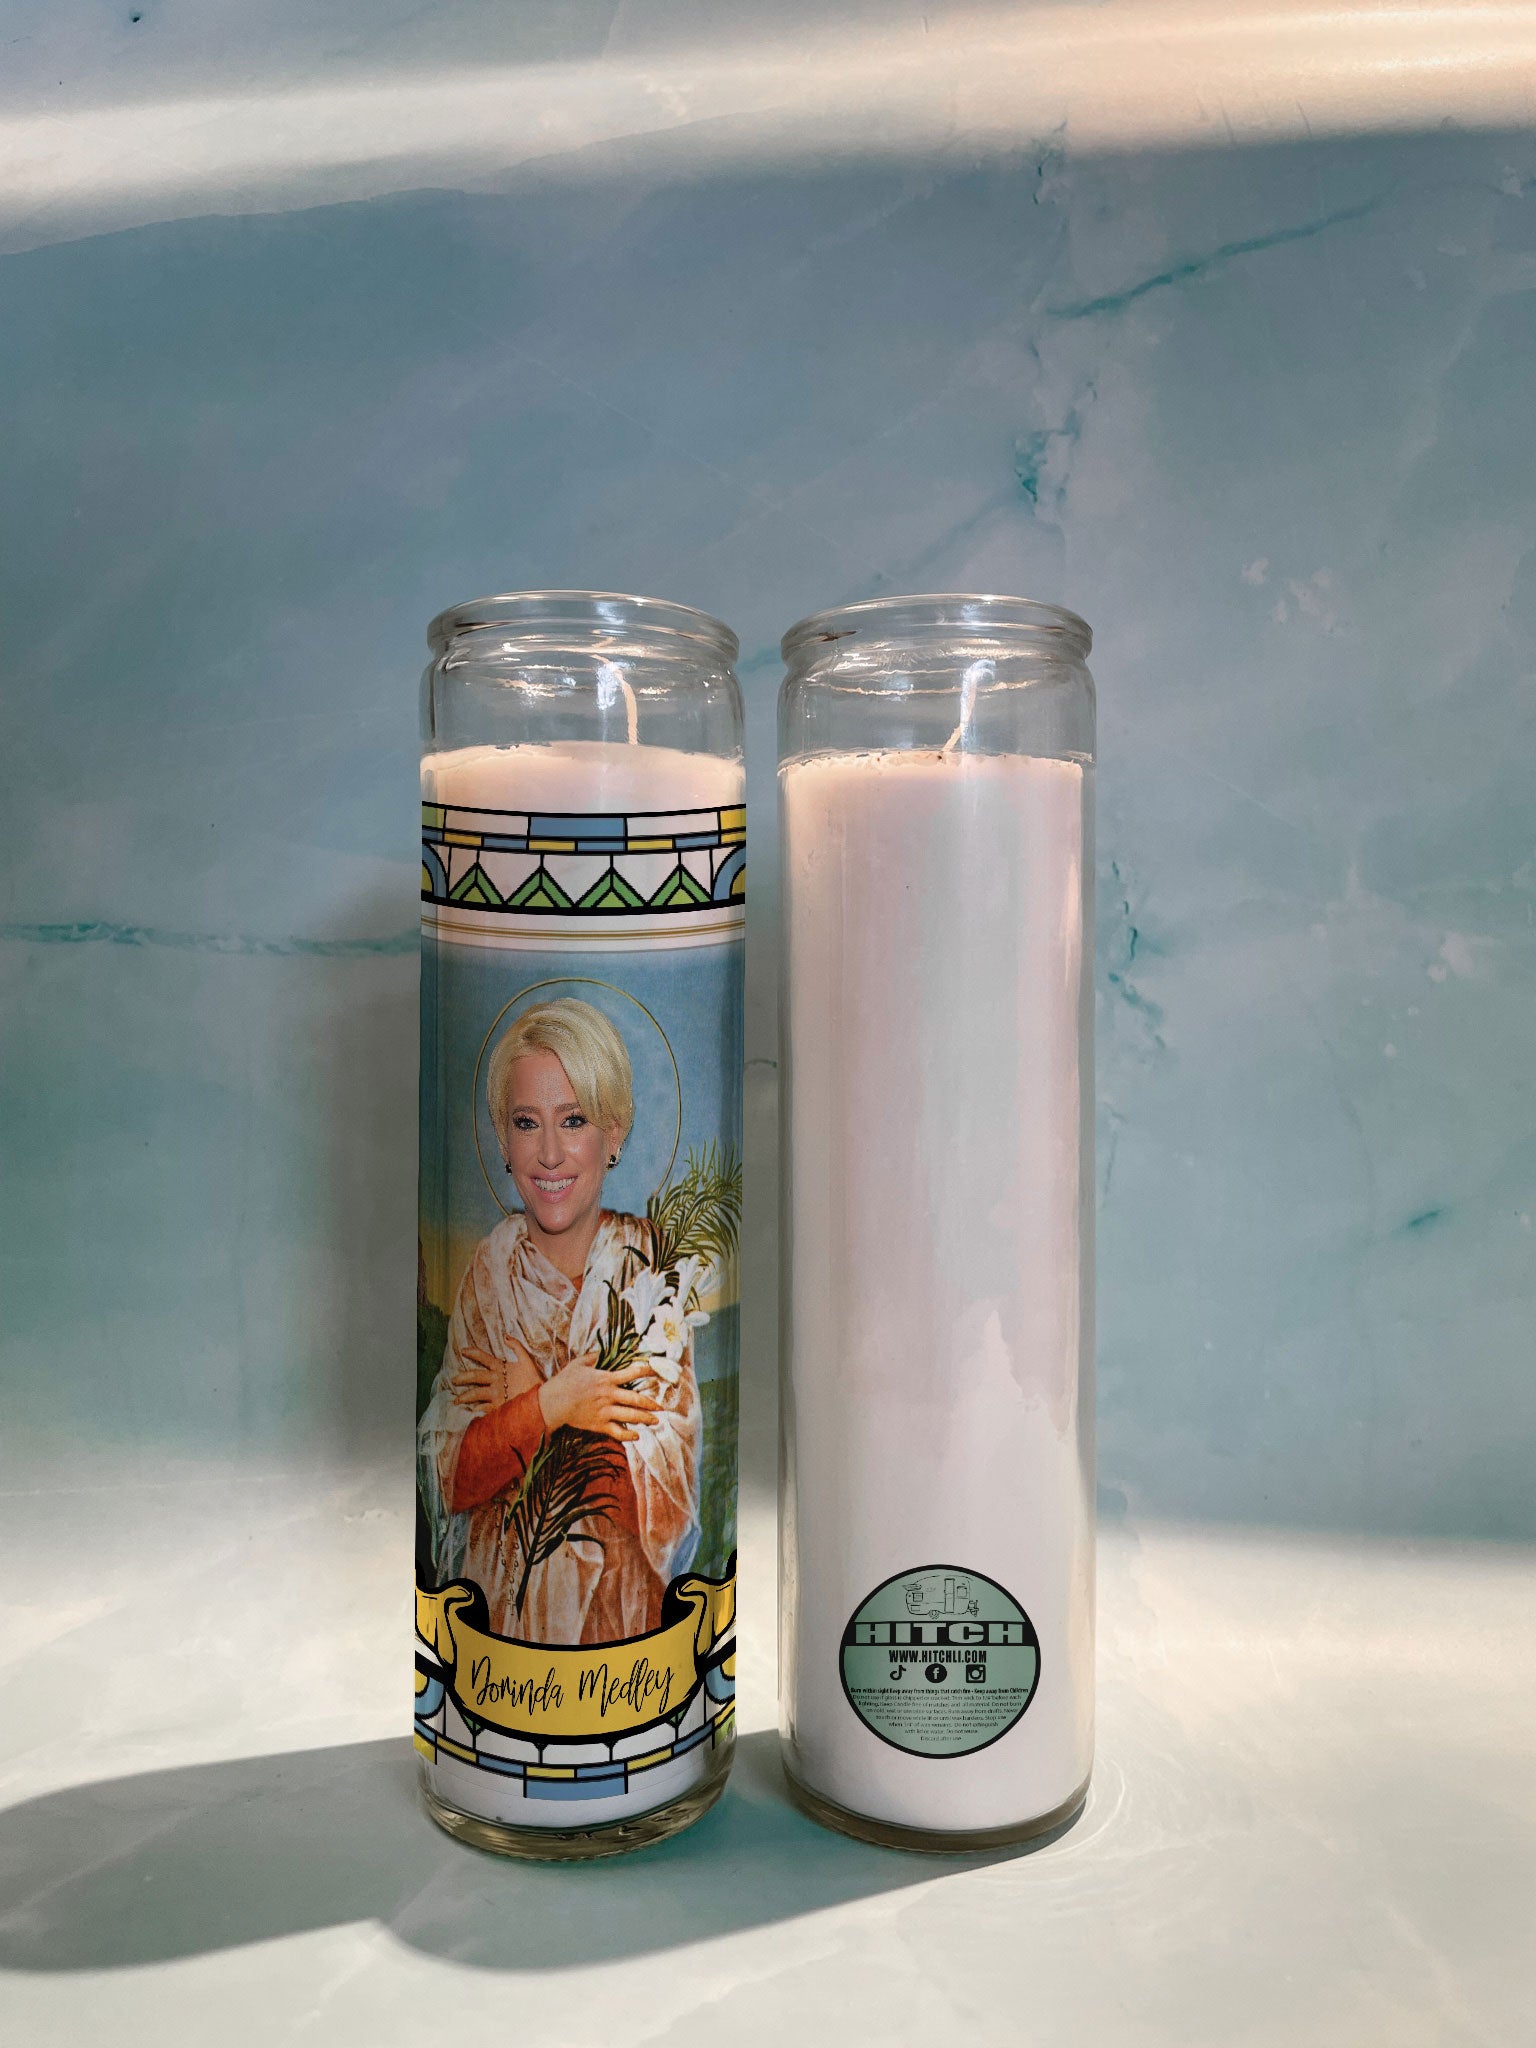 Dorinda Medley Original Prayer Candle